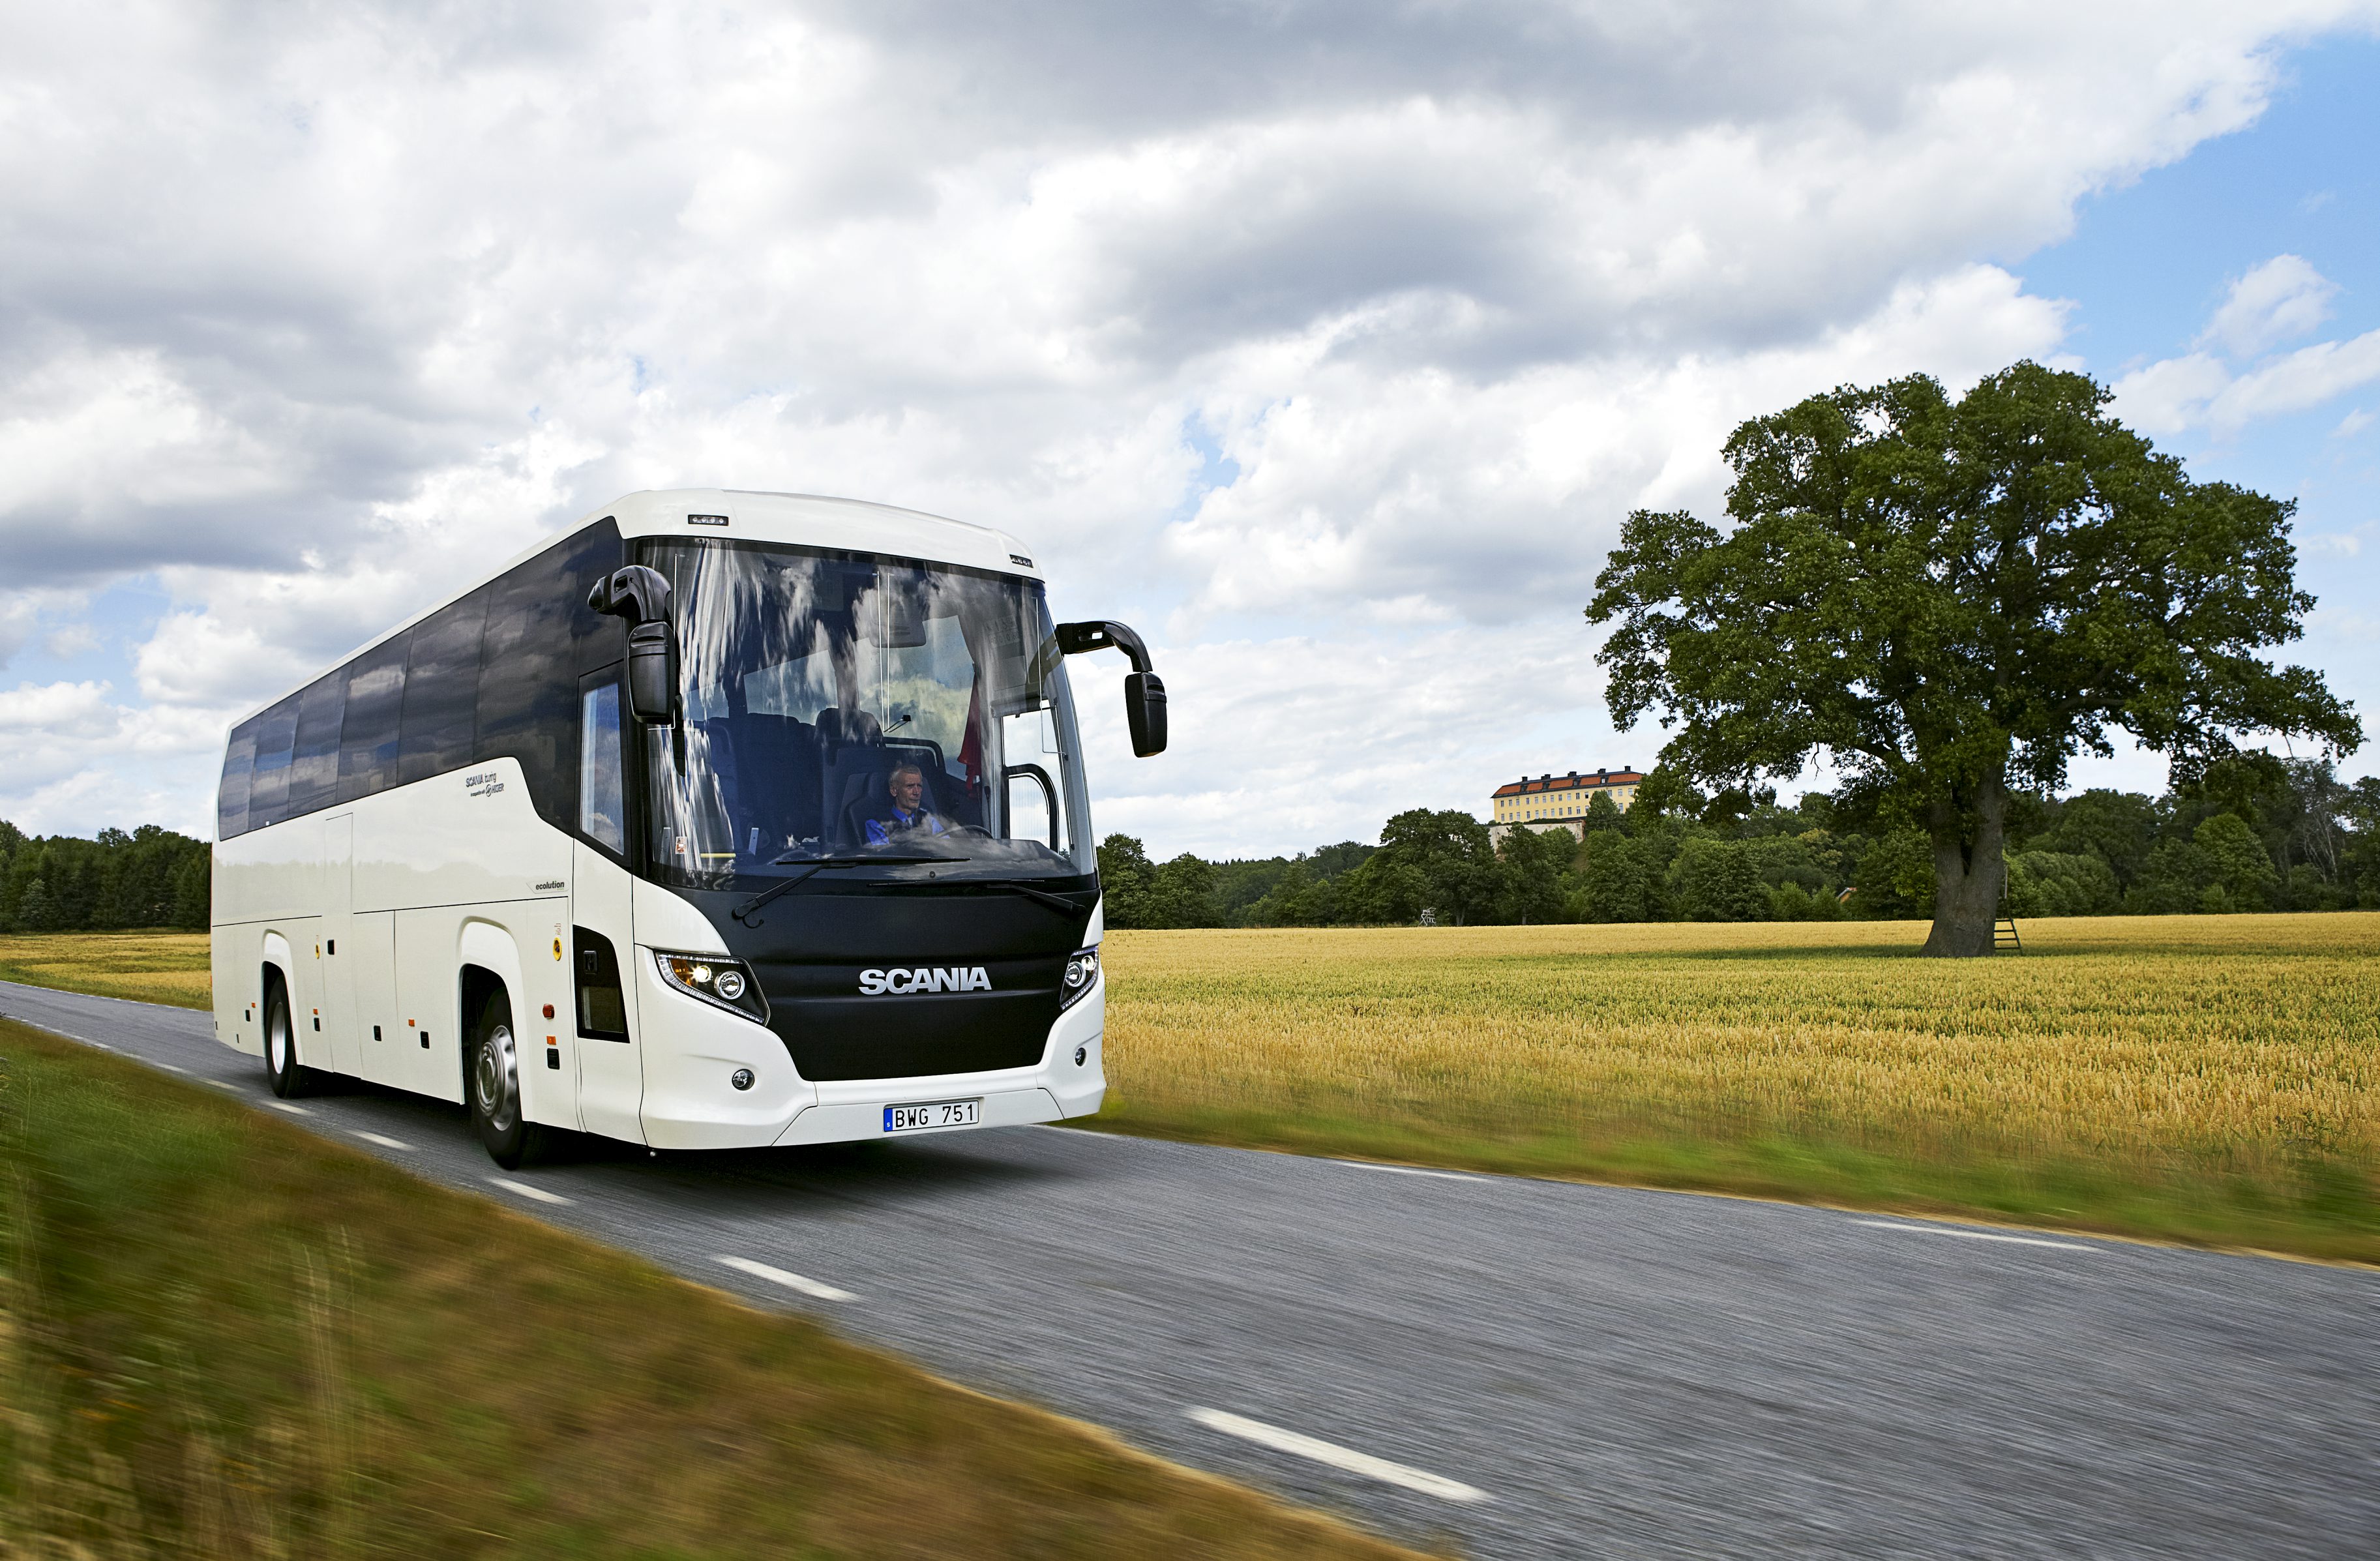 Перевозка людей межгород. Scania Touring. Scania Touring k400. Автобус Скания туристический. Scania k400ib4x2nb.